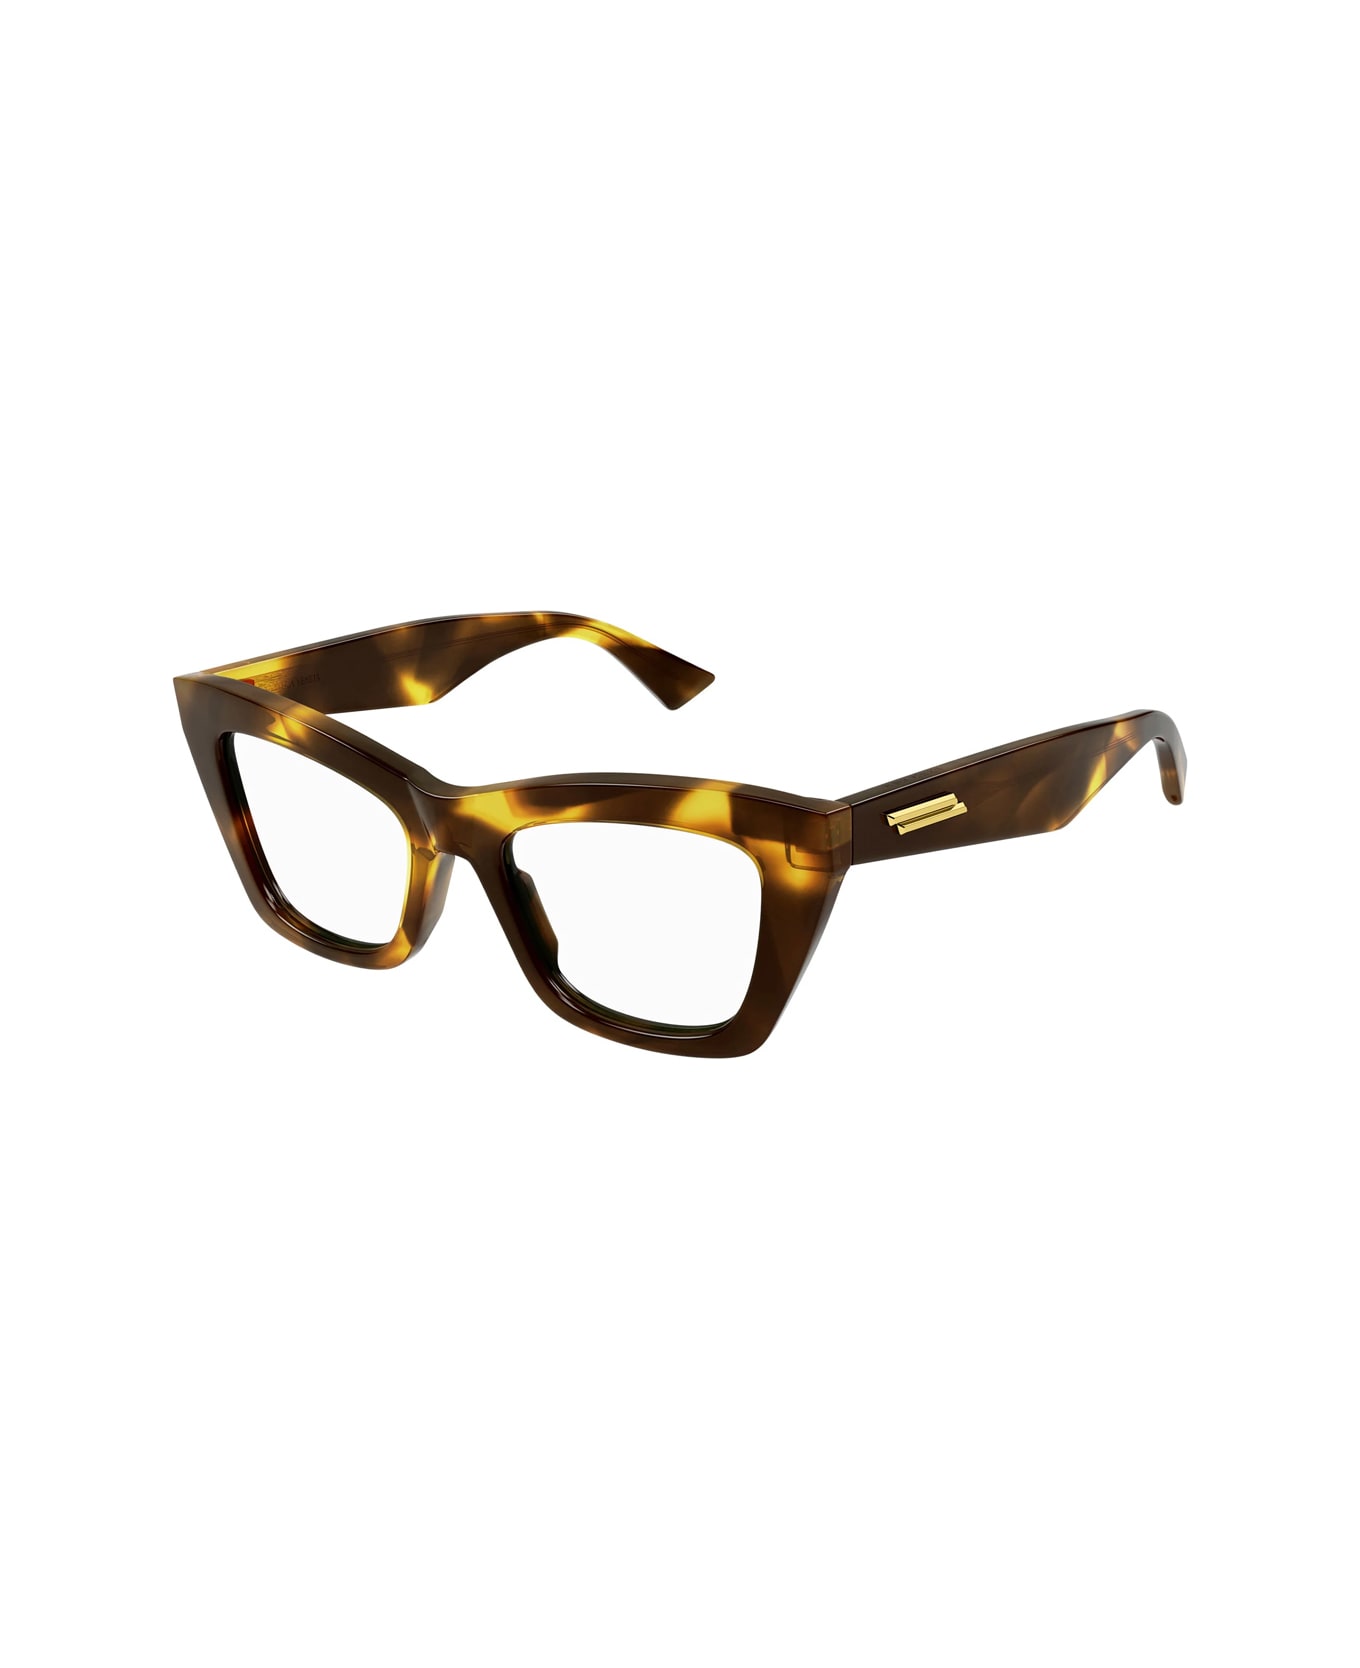 Bottega Veneta Eyewear Bv1215o Line New Classic 005 Glasses - Marrone アイウェア